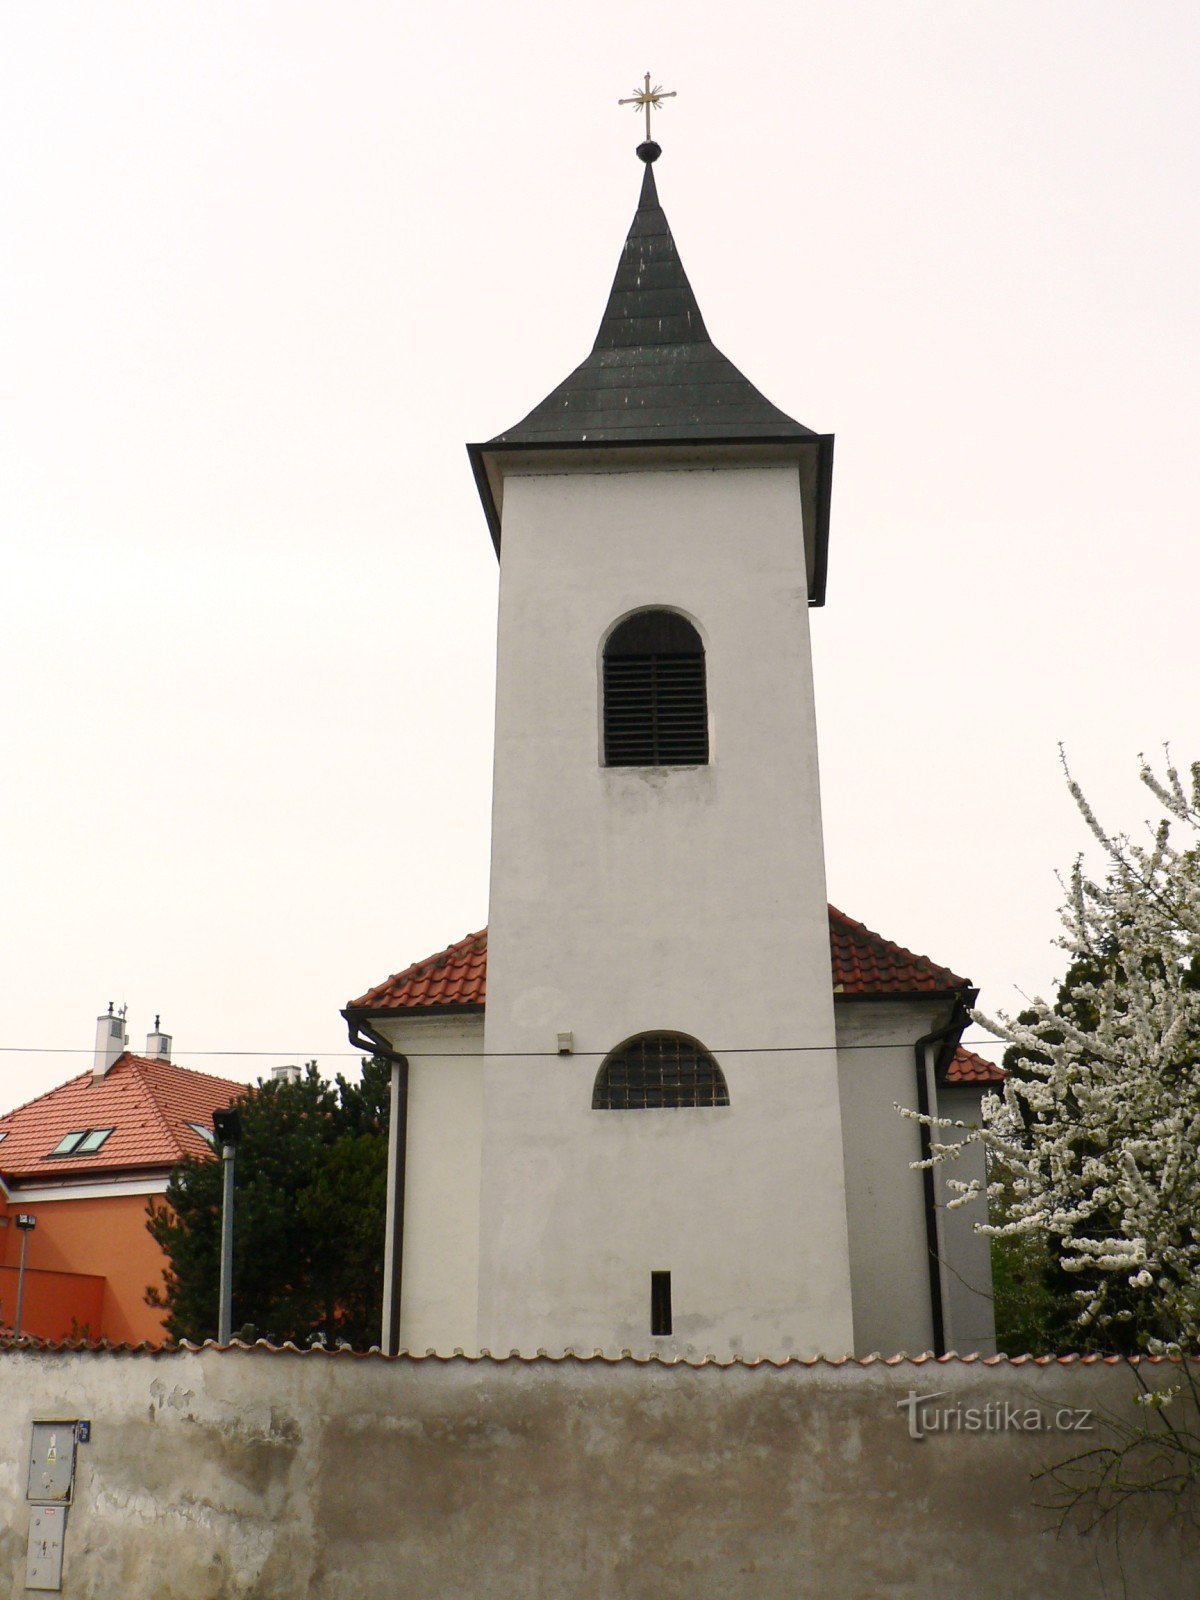 Hrnčíře (Prague) - Église de St. Procope